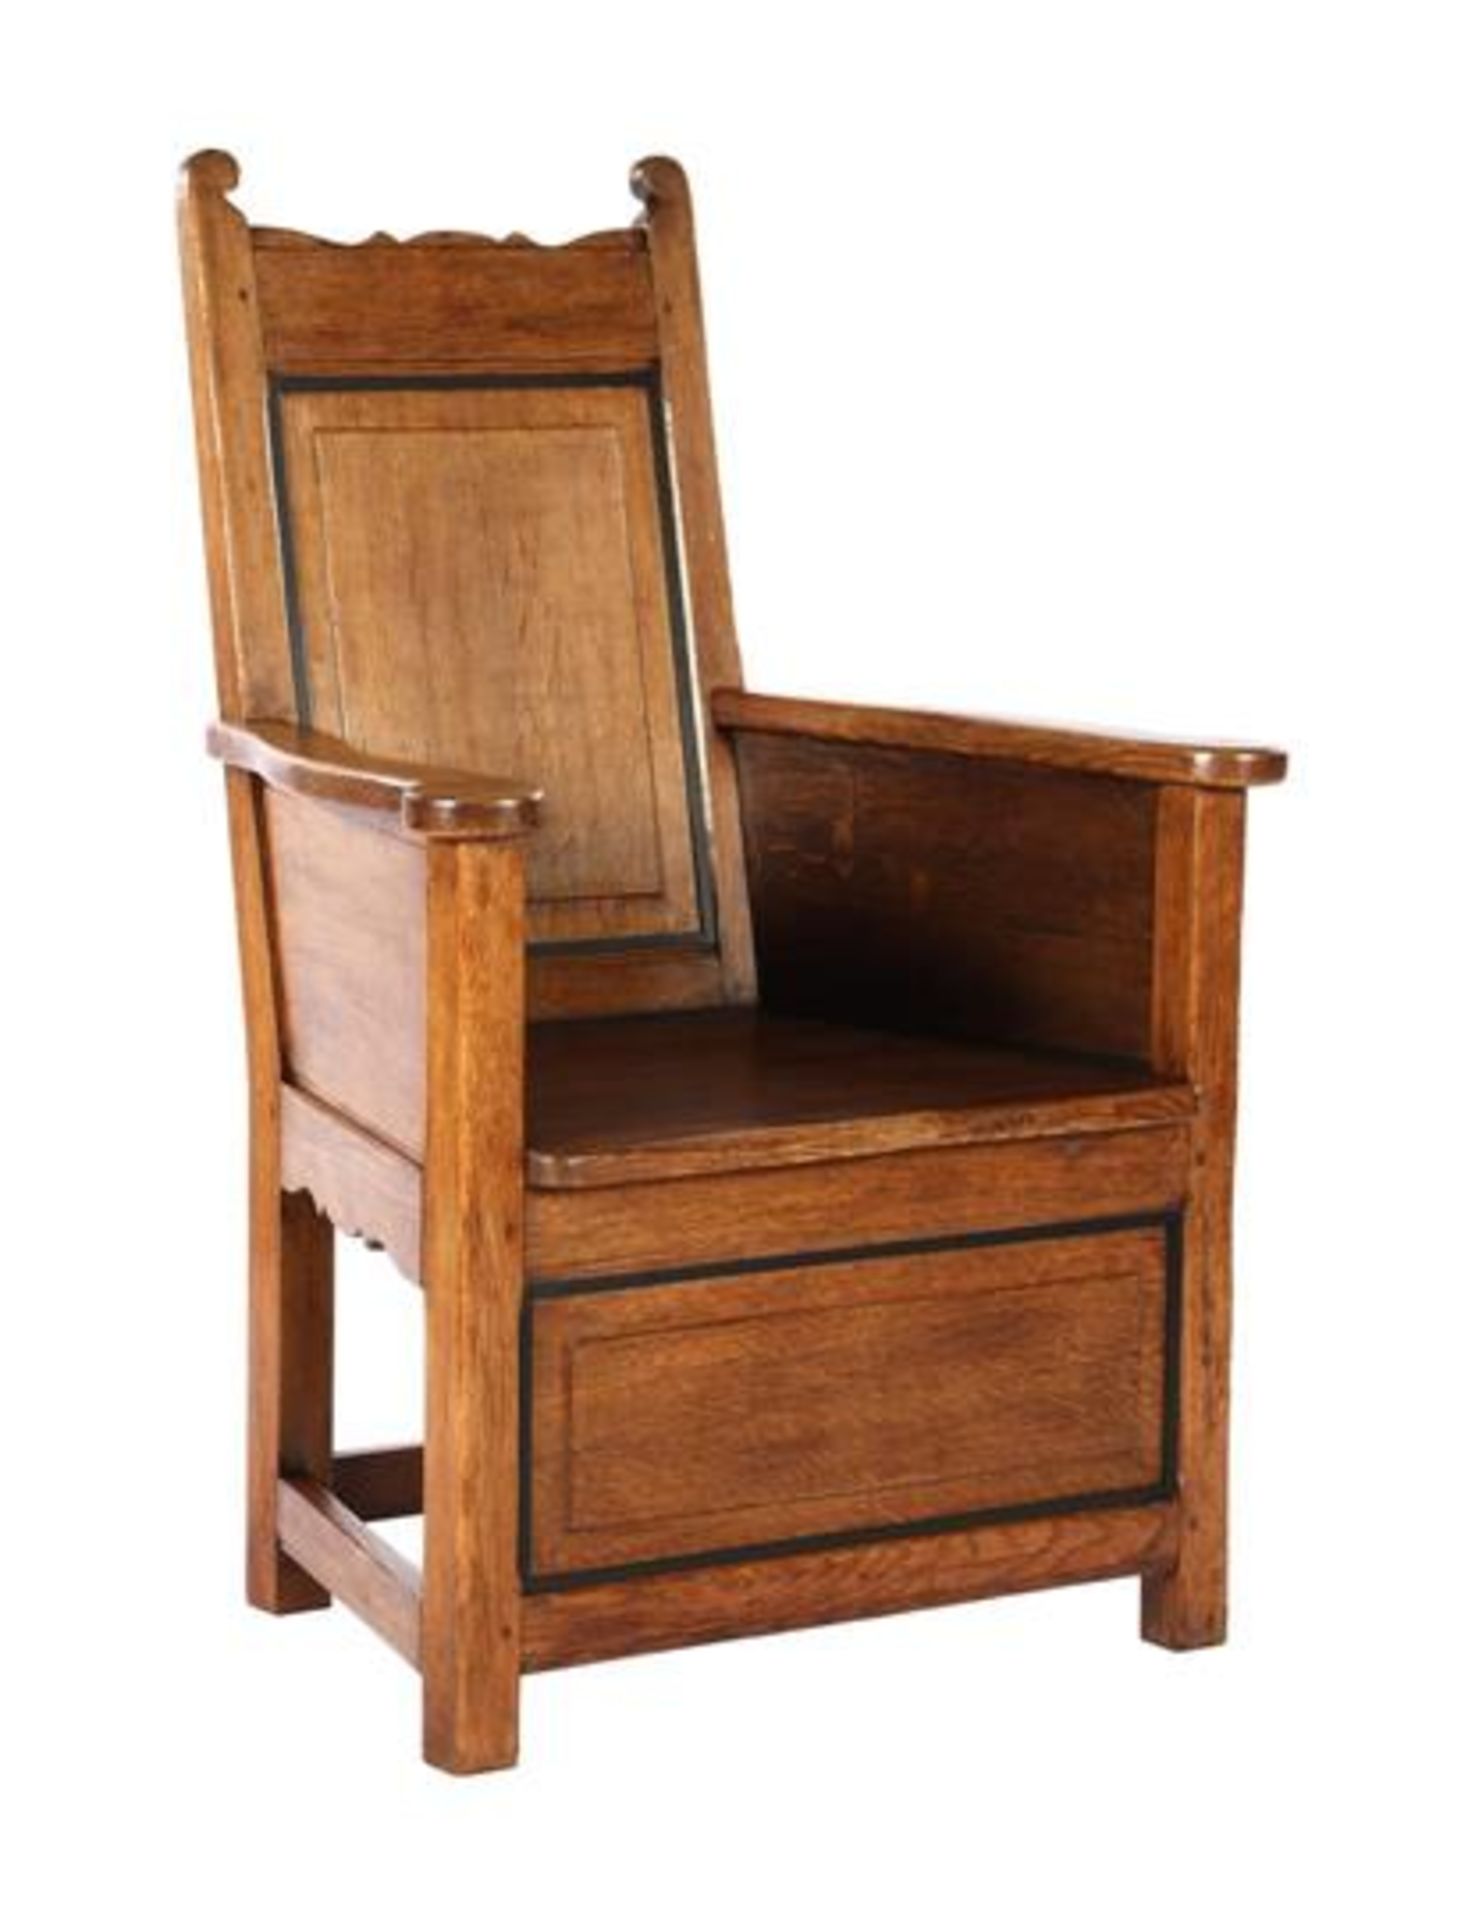 Antique oak chair, backrest 100 cm high, 67 cm wide at the front